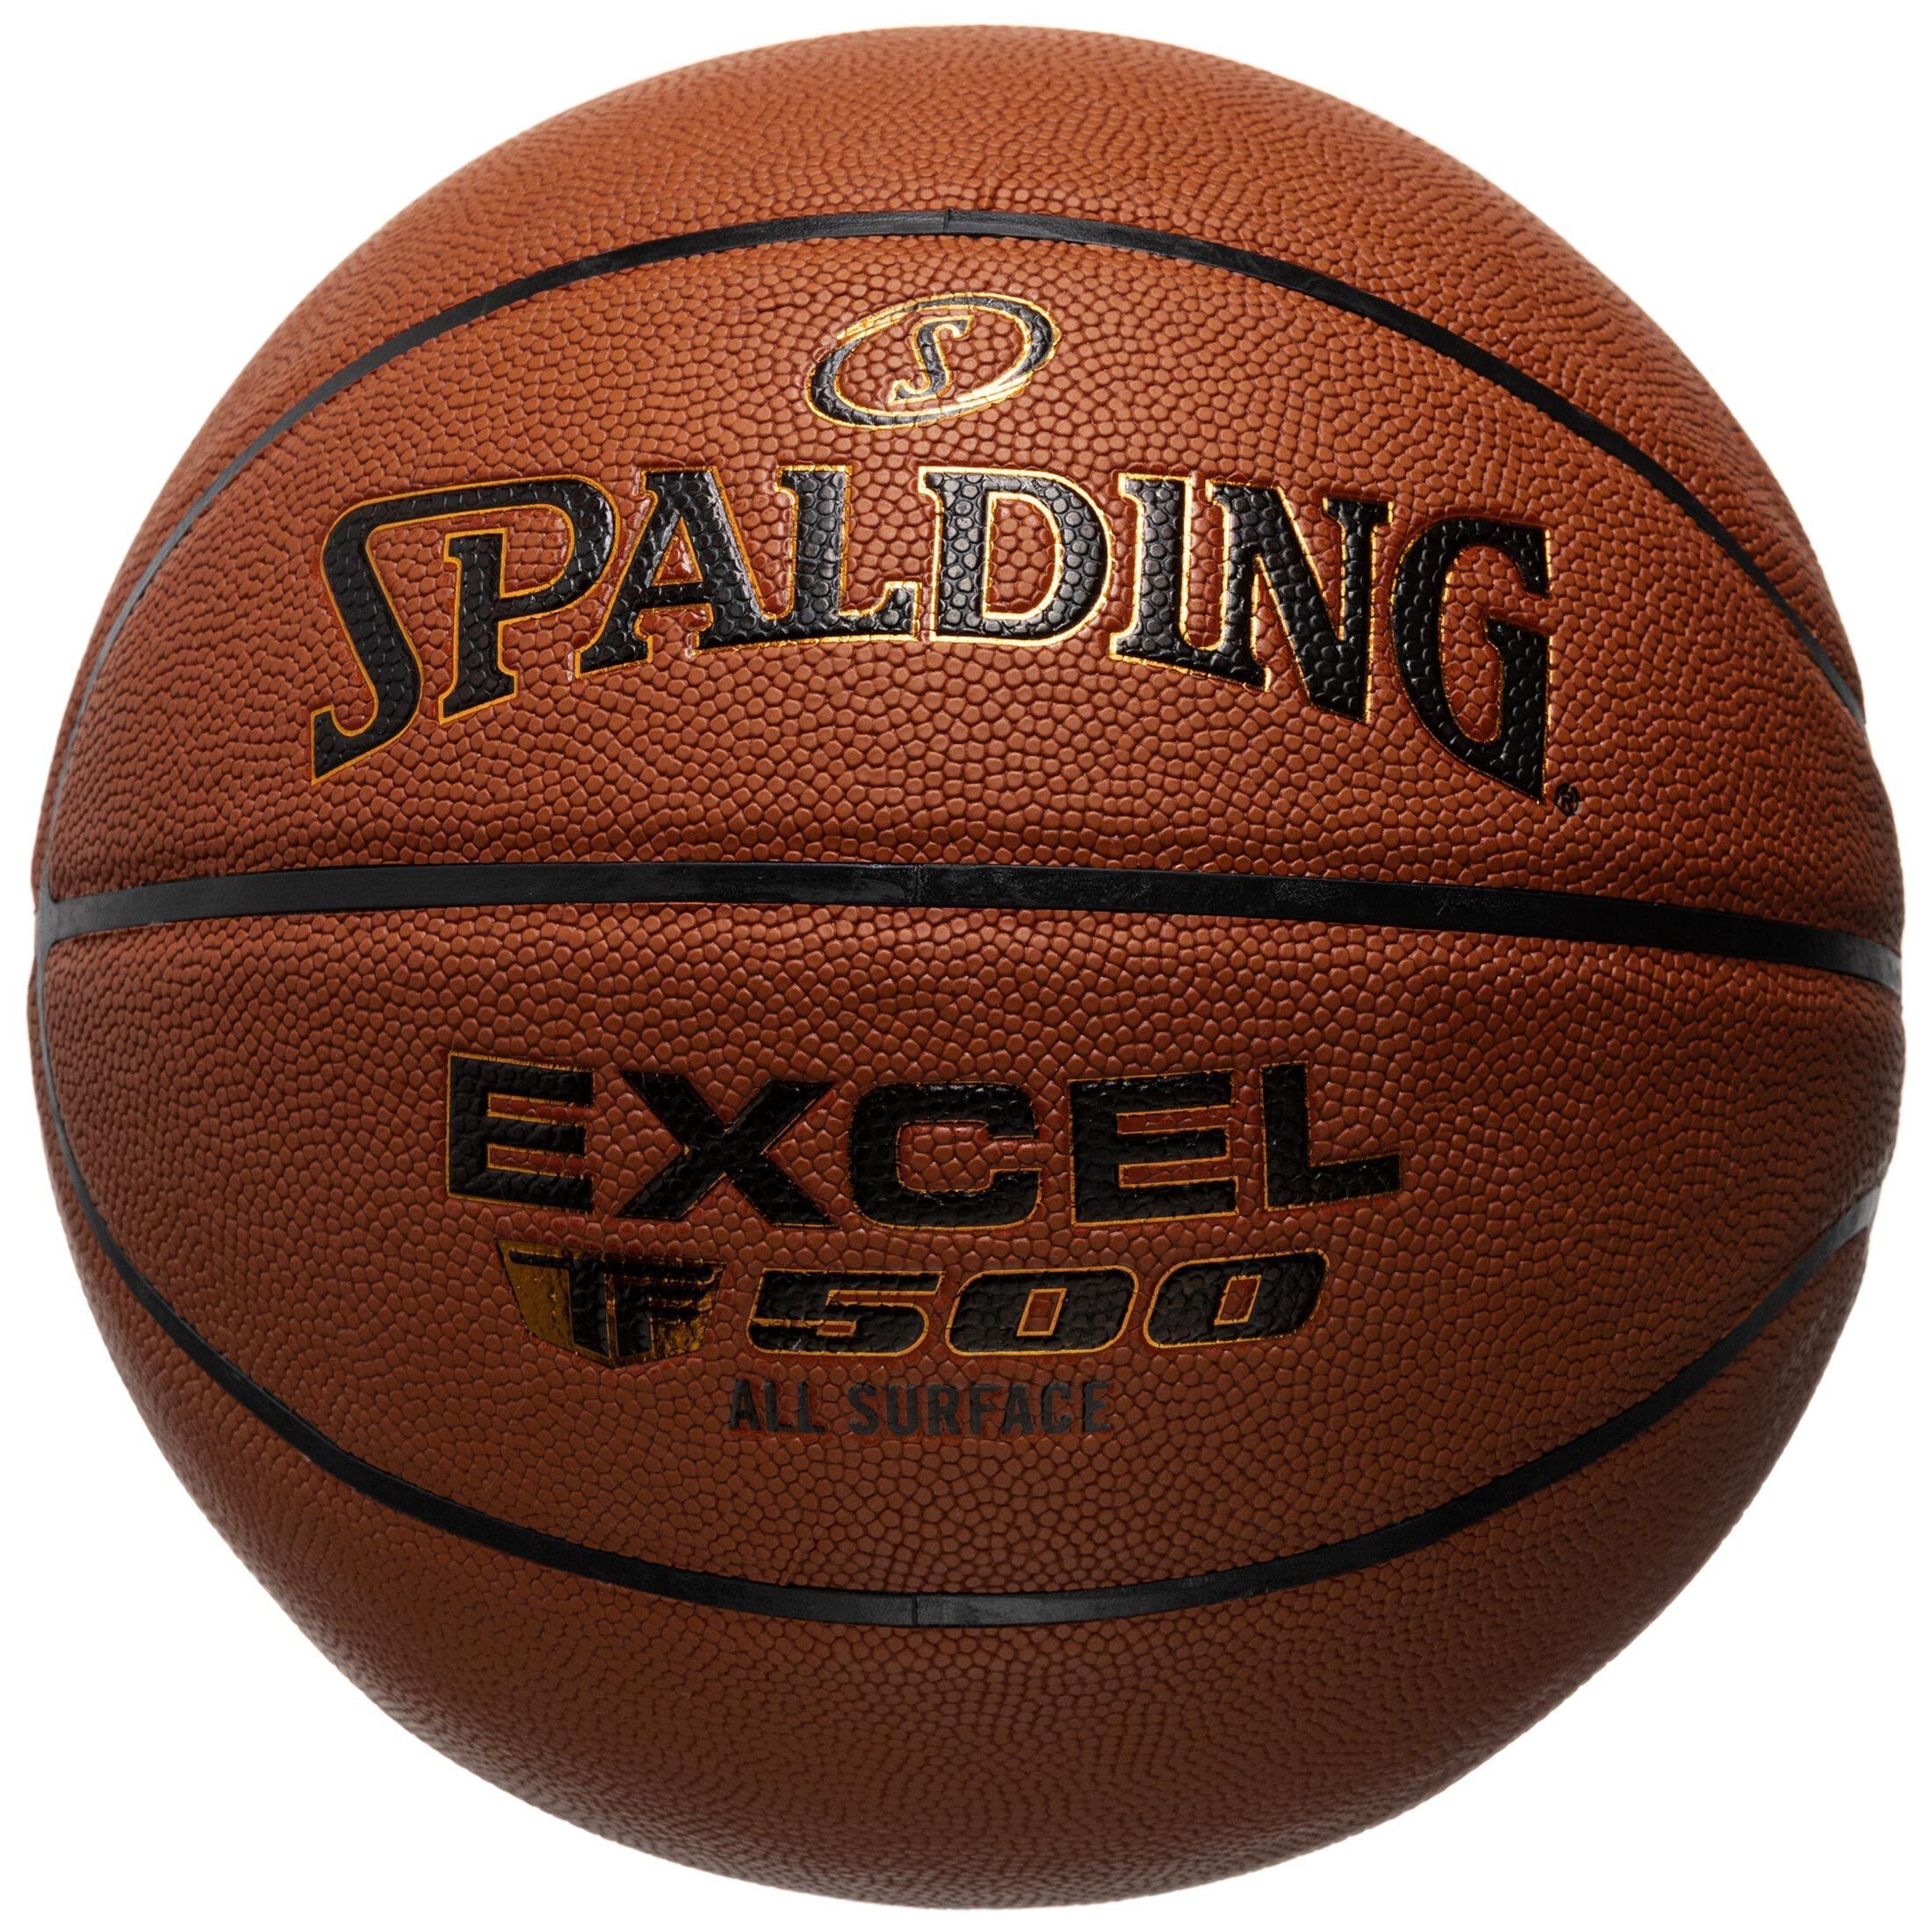 Spalding Basketball Excel TF-500 Basketball